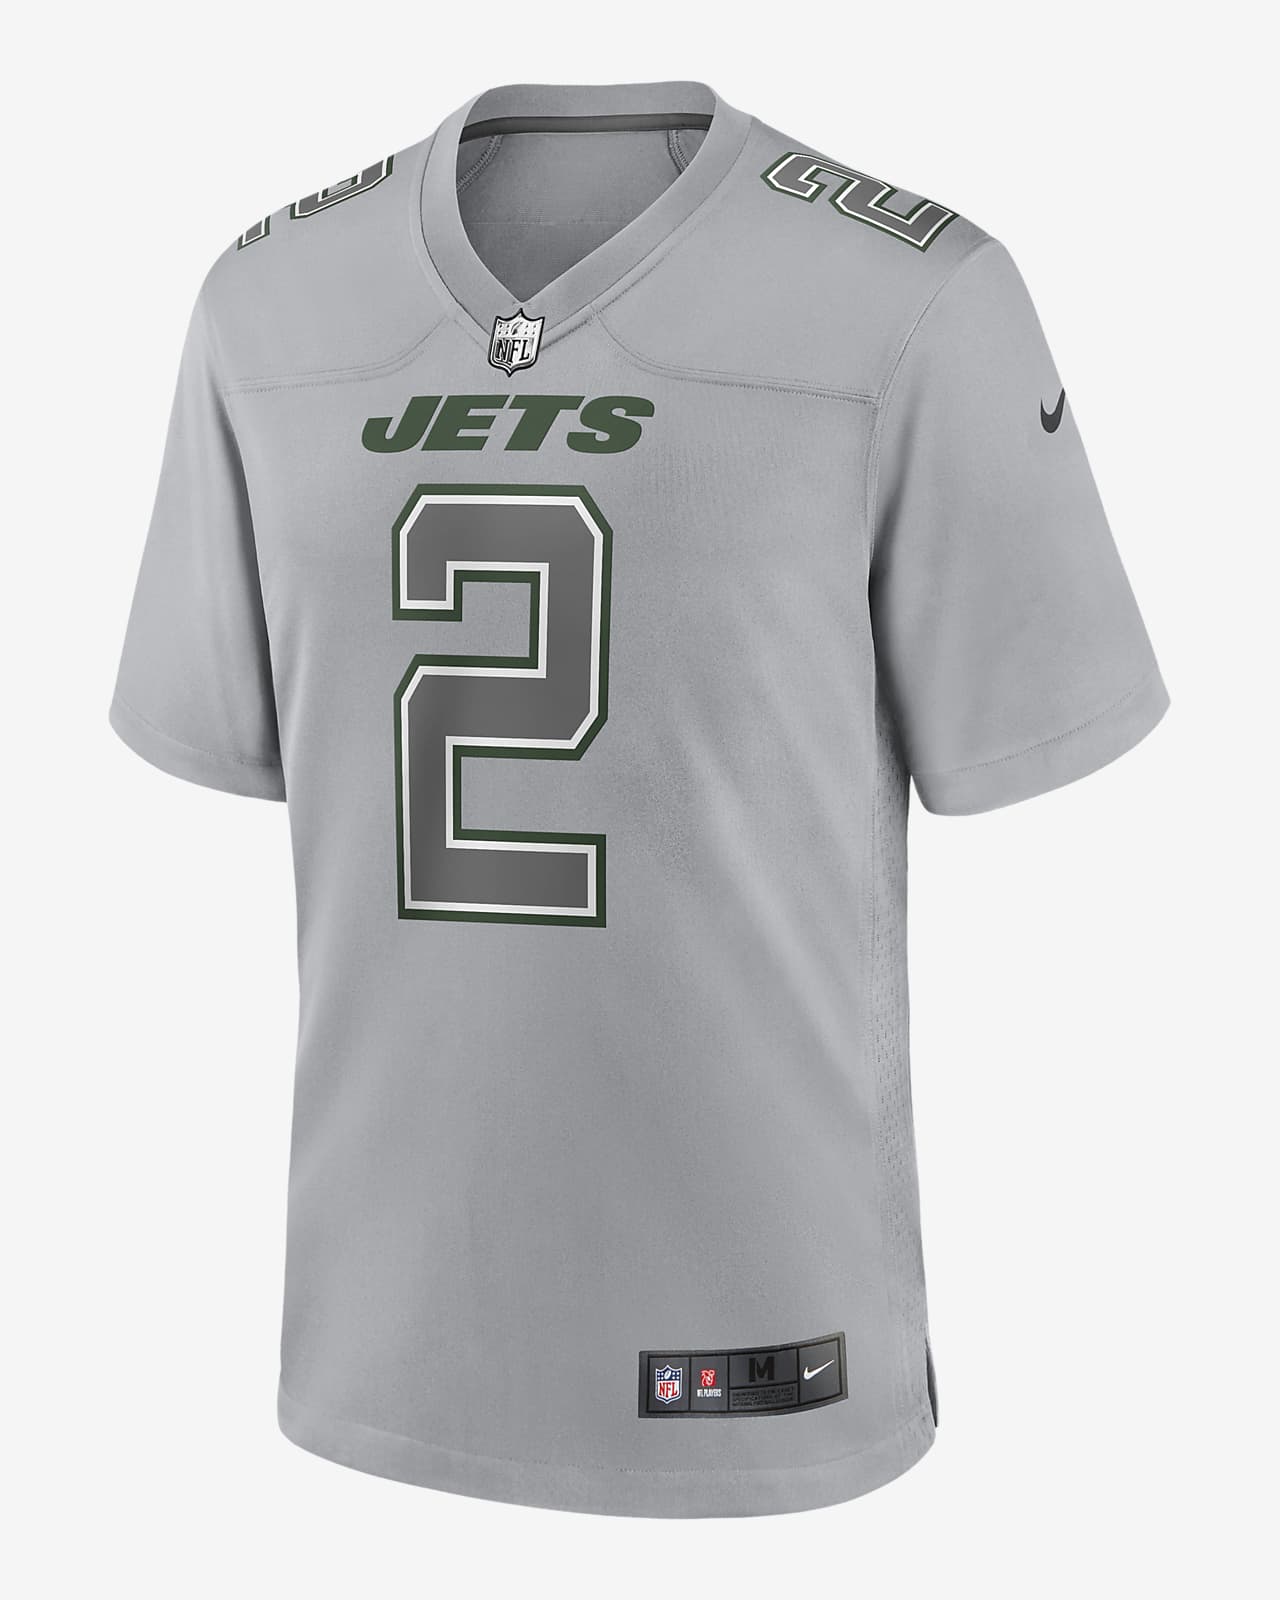 new york jets wilson jersey